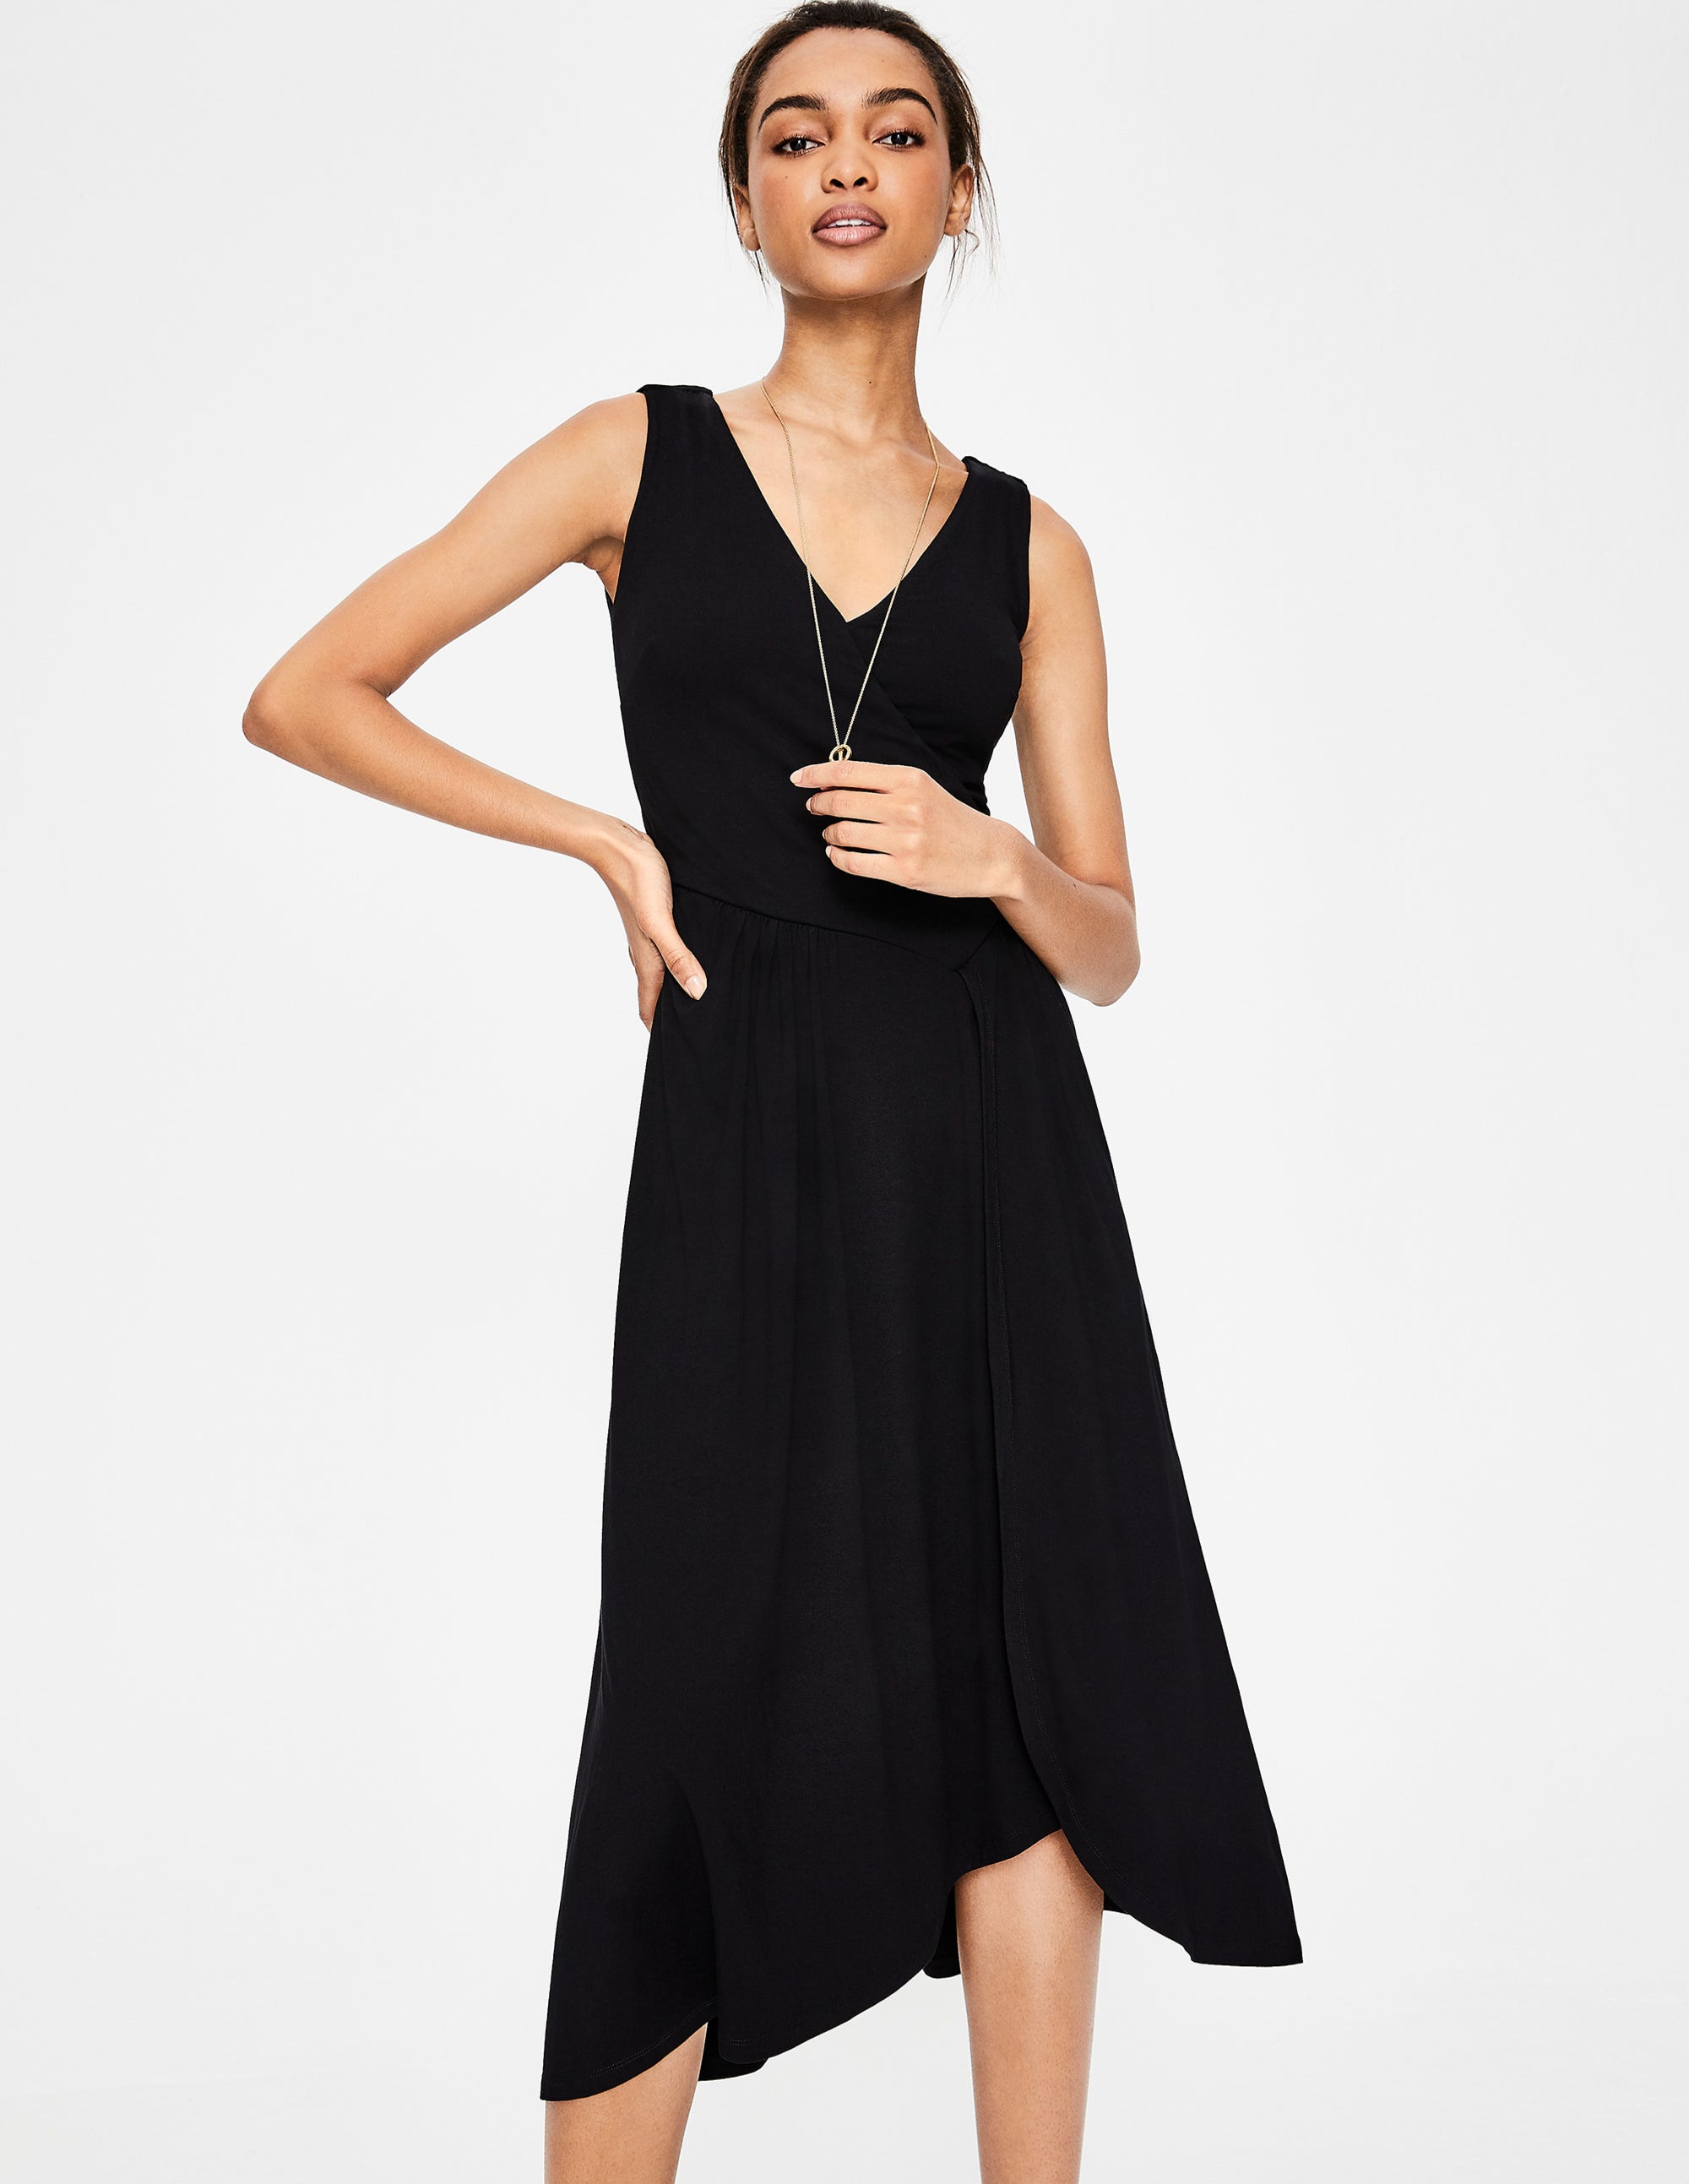 Jennifer Jersey Dress - Black | Boden EU